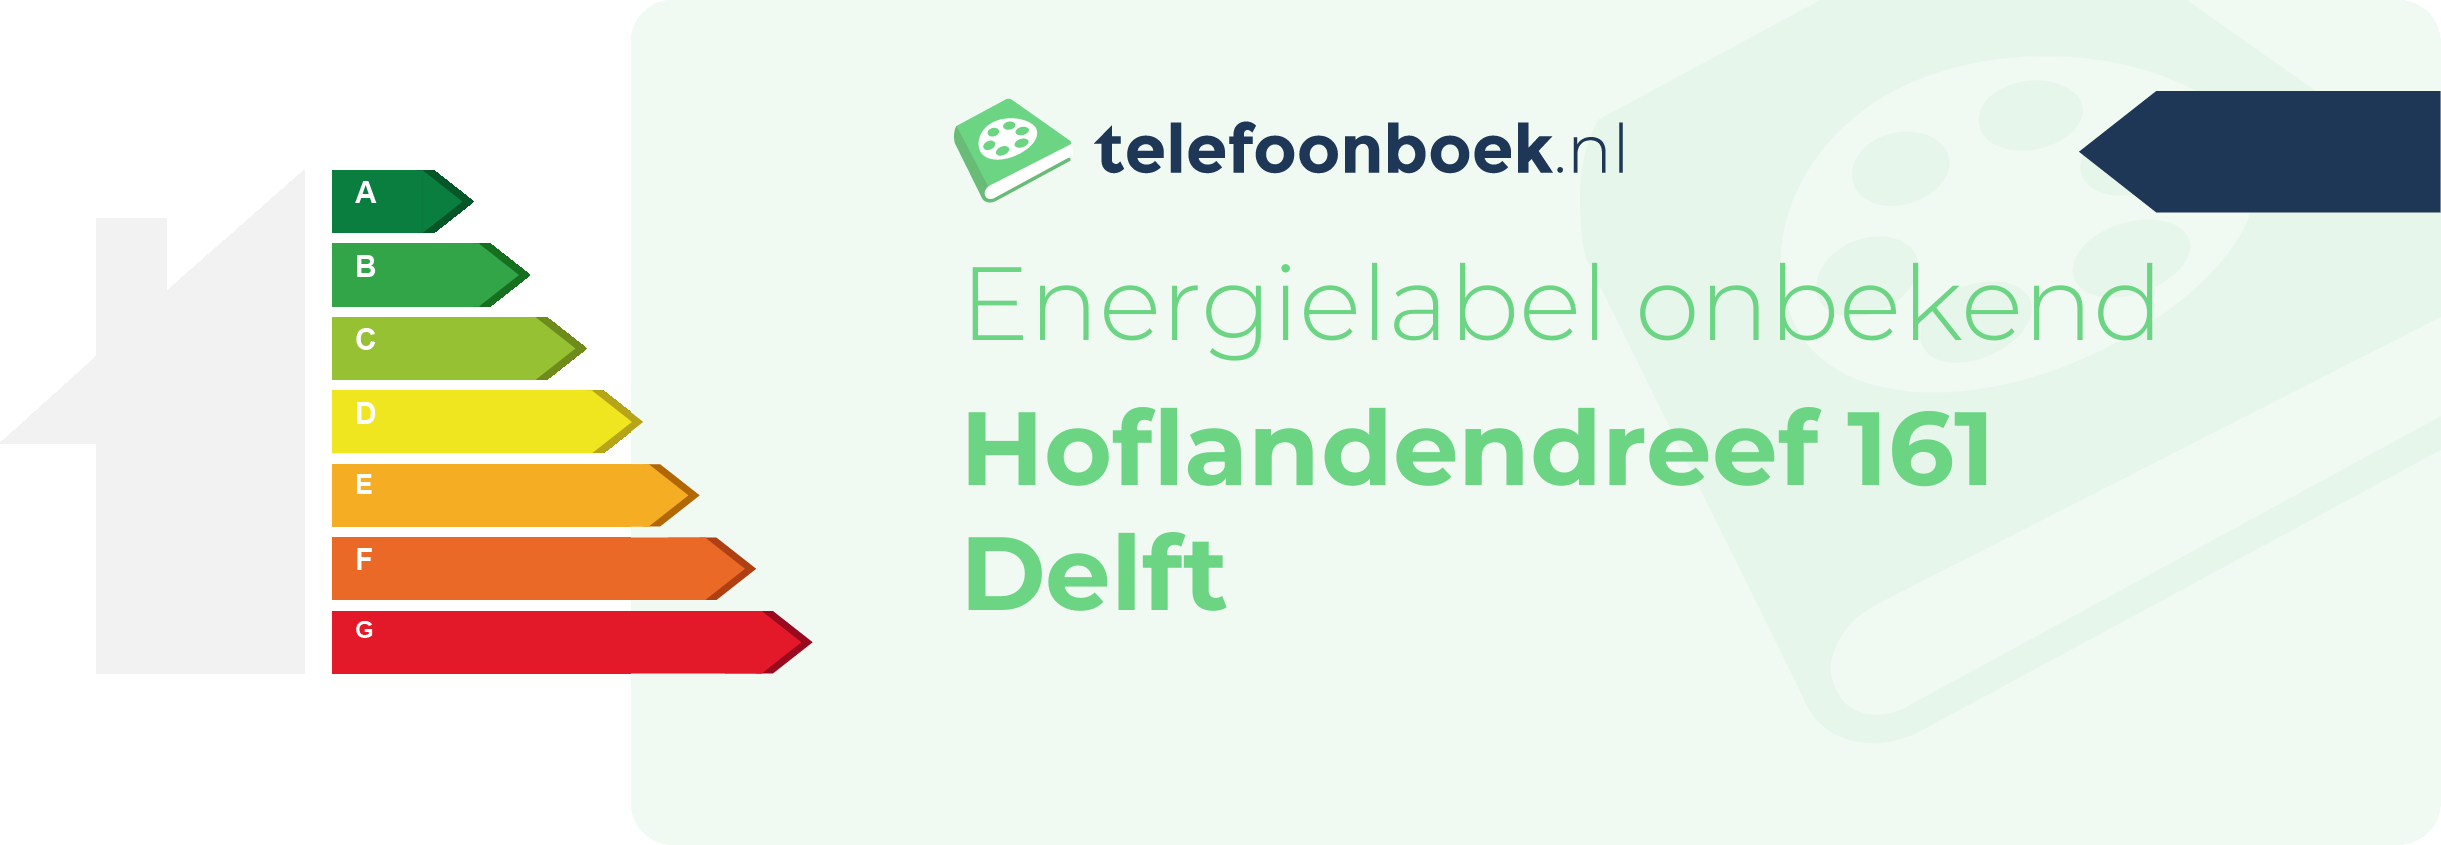 Energielabel Hoflandendreef 161 Delft